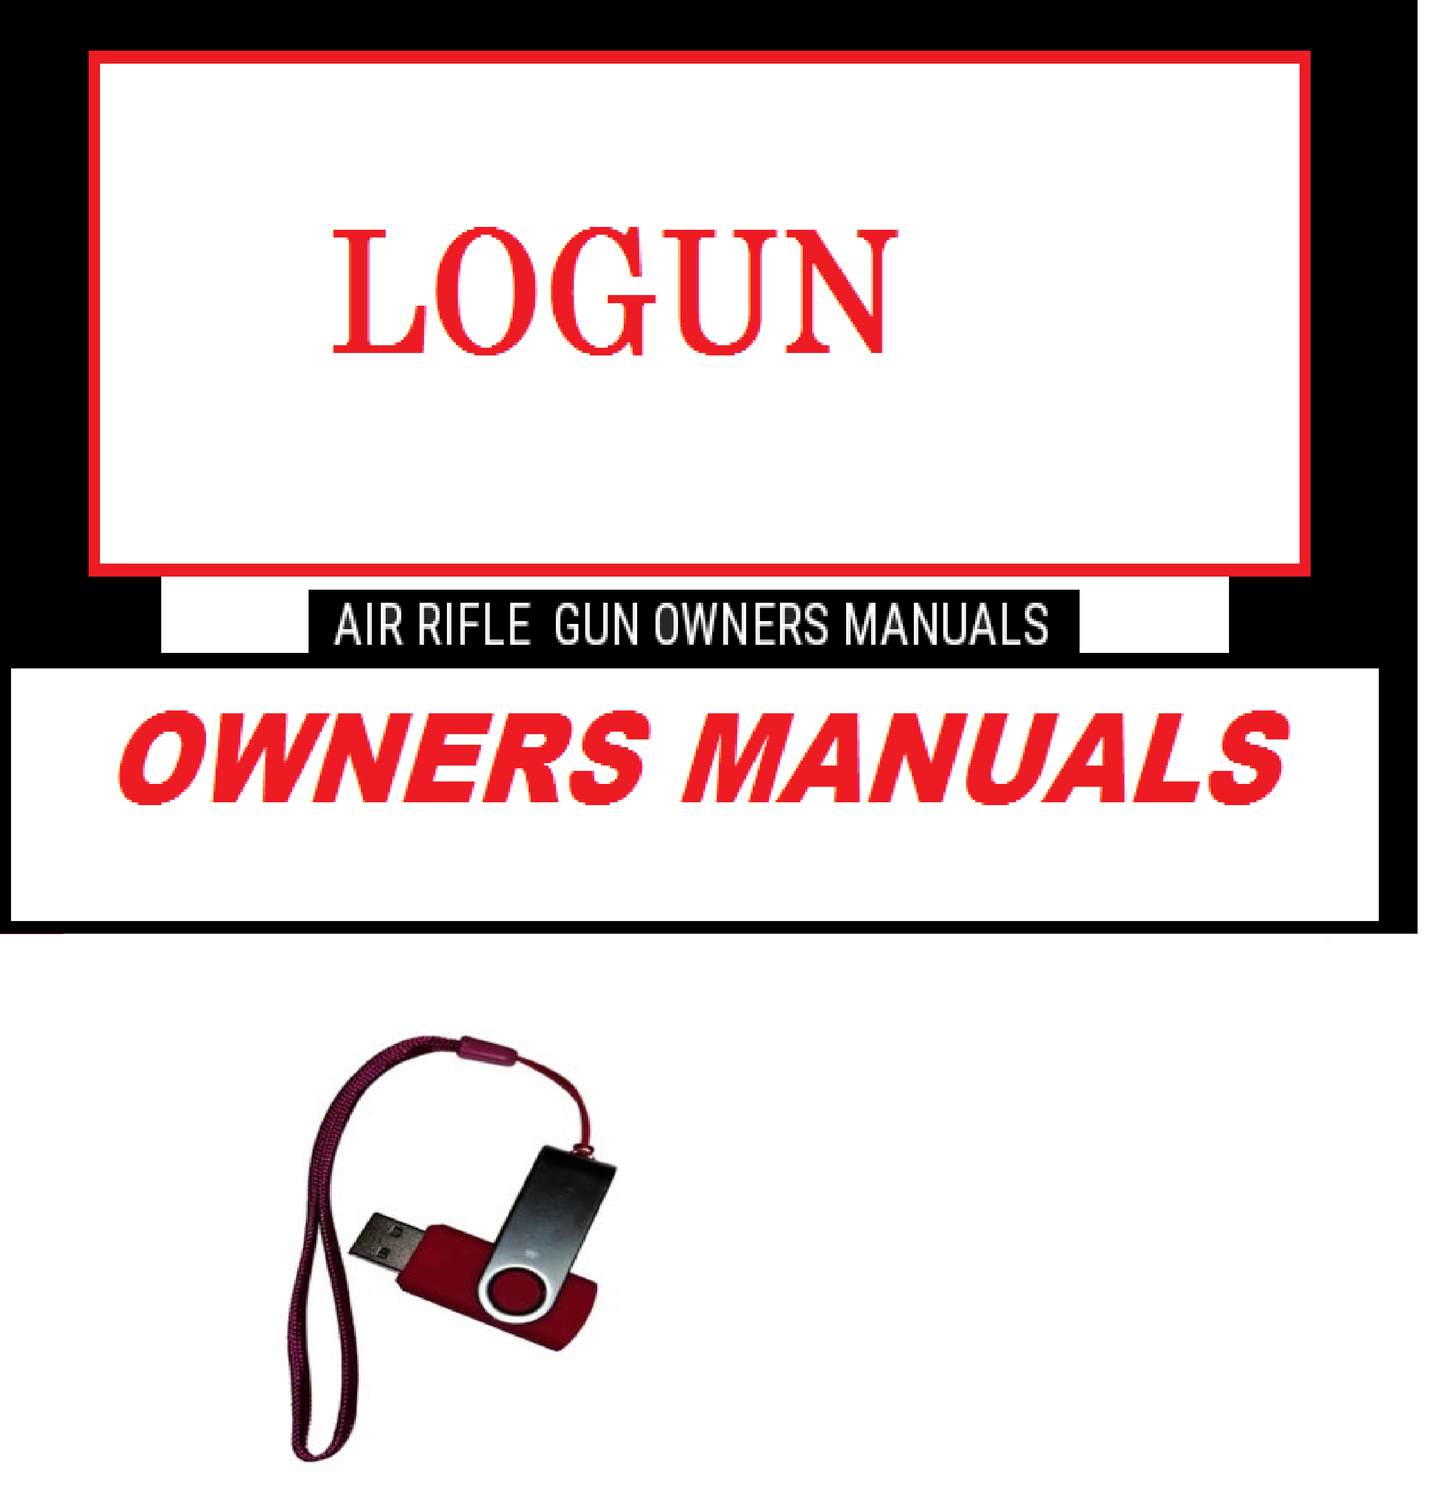 Logun Air Rifle Gun Owners Manuals Exploded Diagrams Service Maintenance And Repair